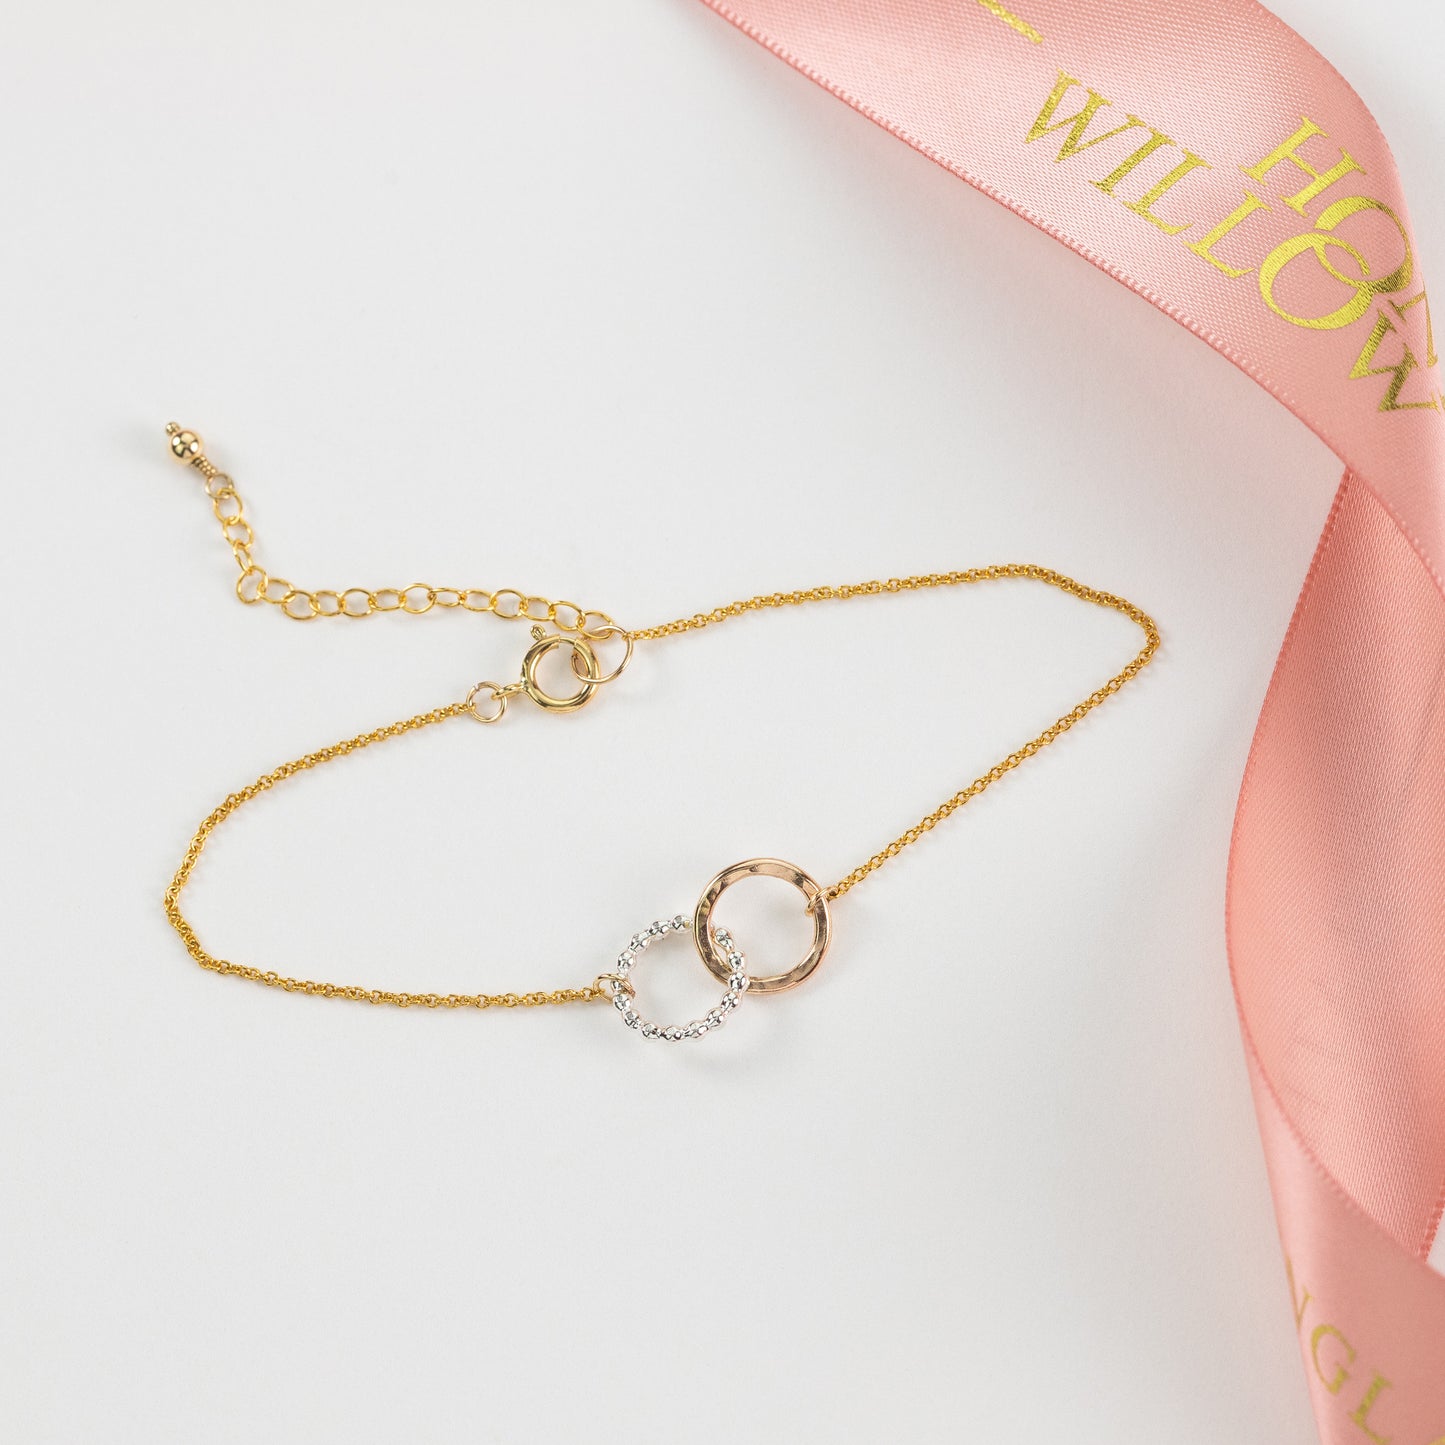 Friendship Gift - Love Link Bracelet - Silver & Gold